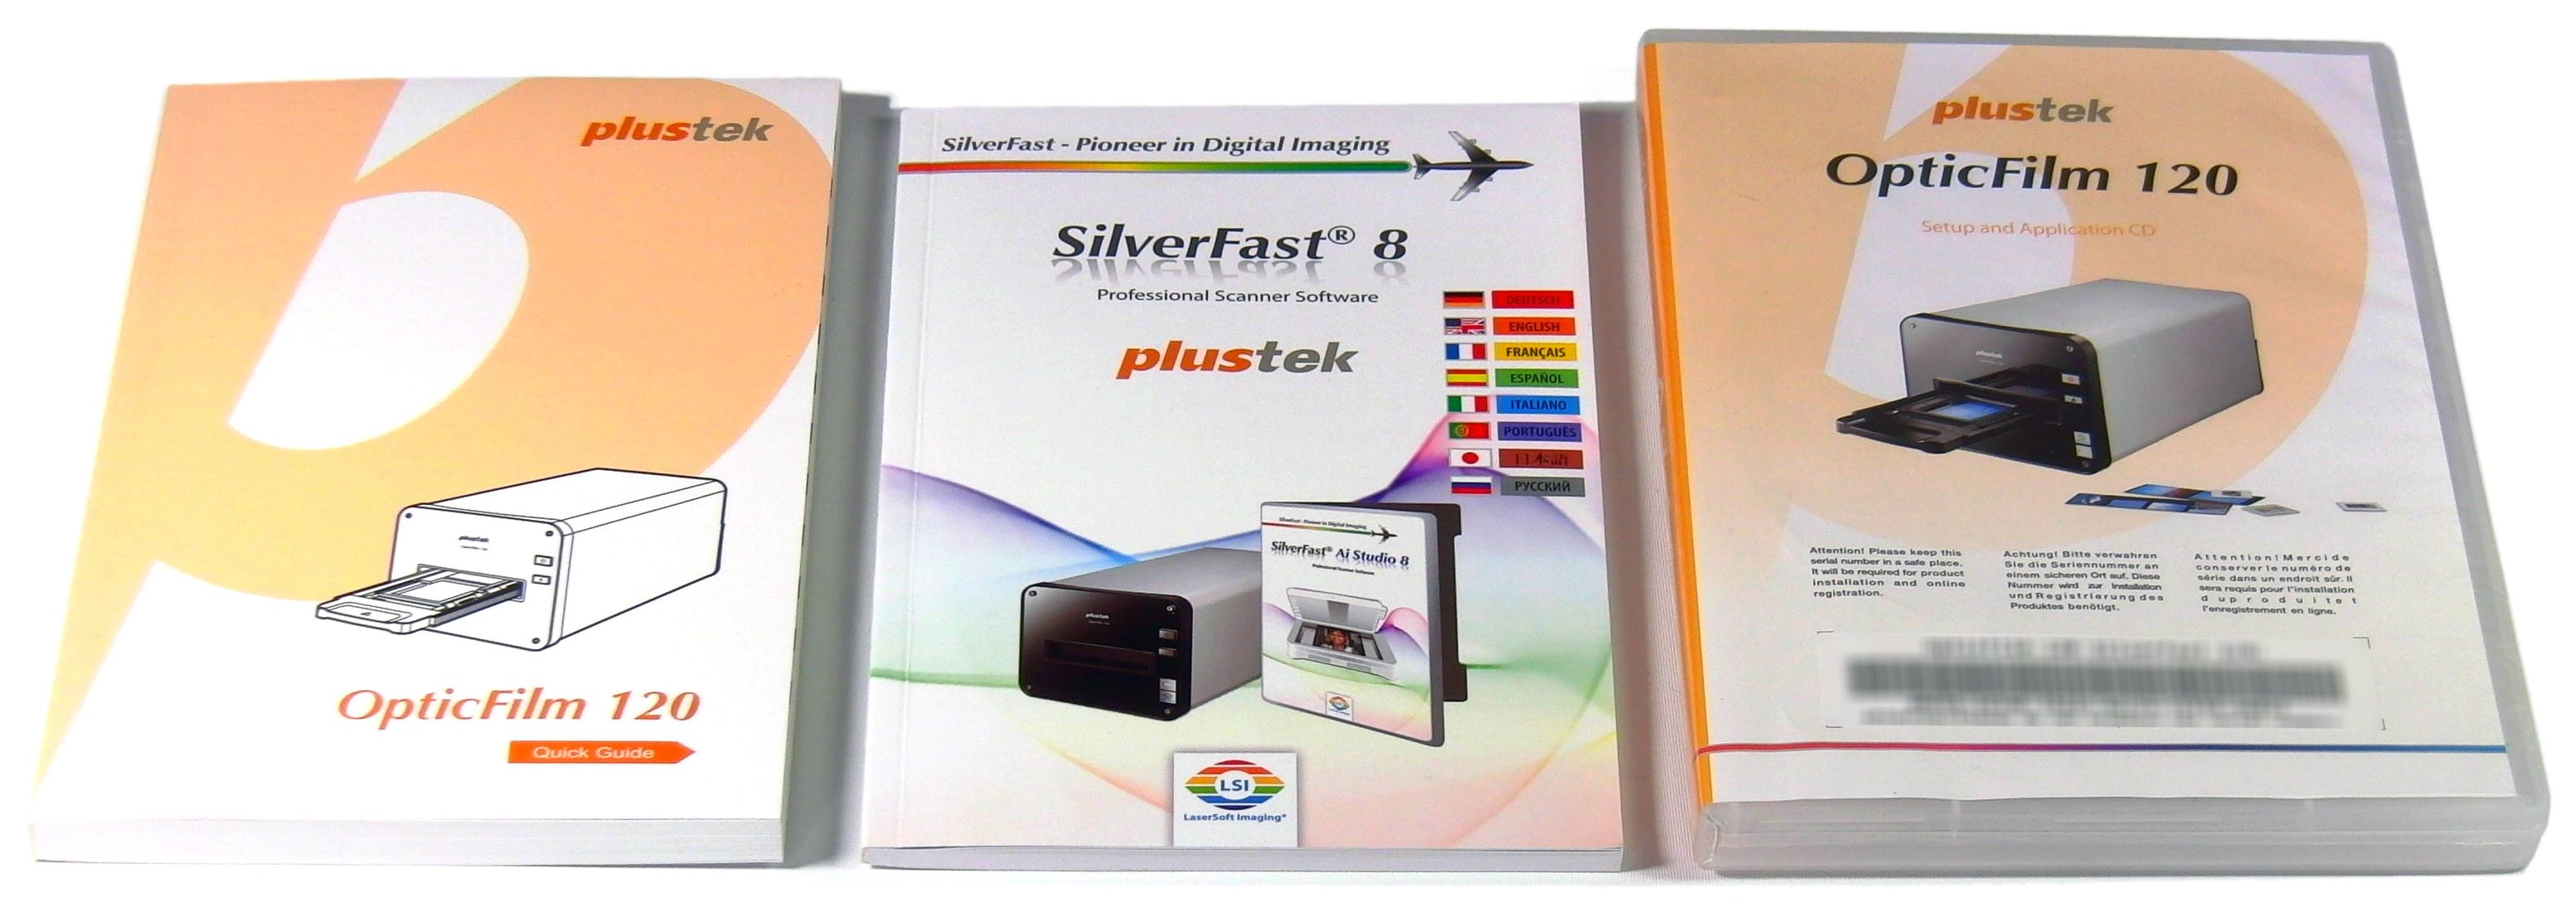 Highres Plustek 120 Manuals and Cds 1363960817